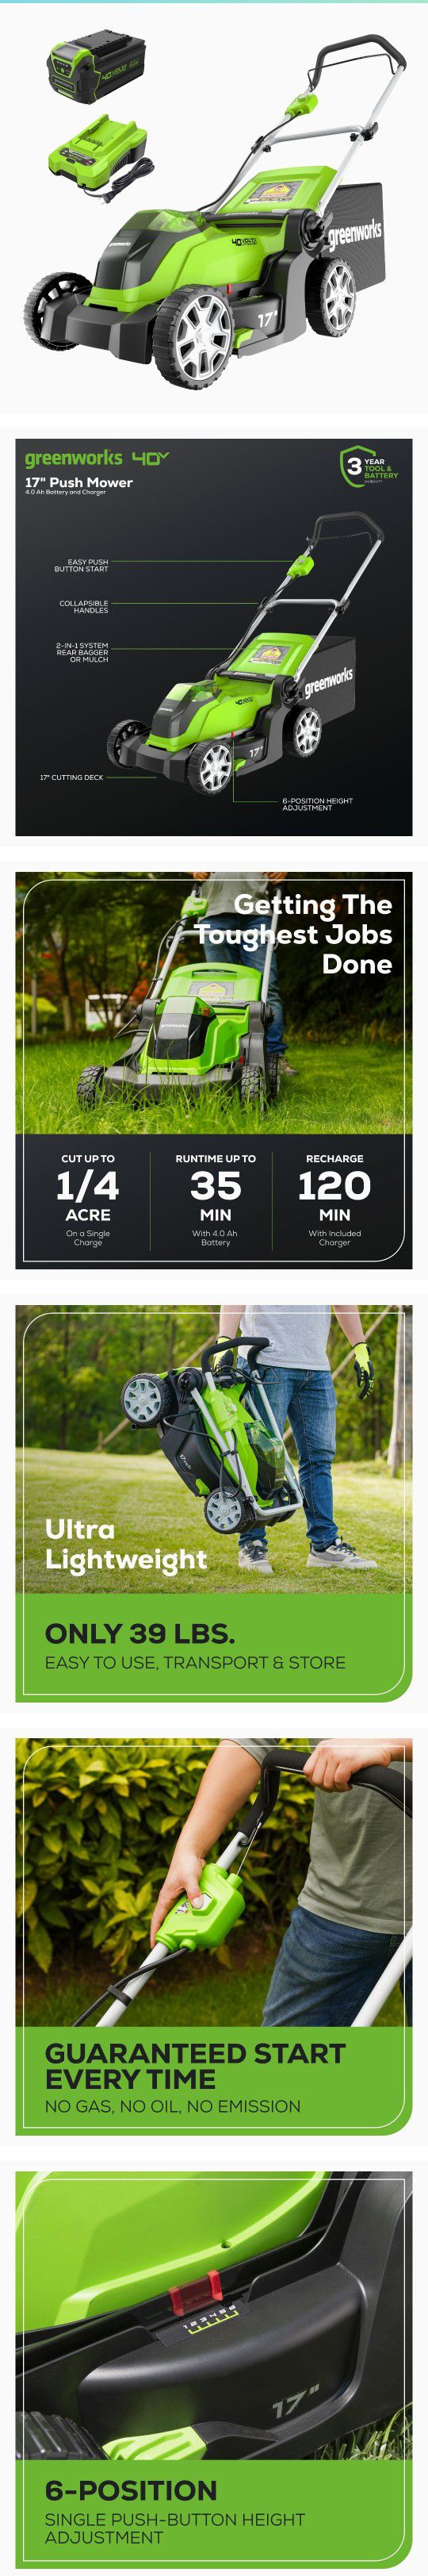 Brand New Greenworks 40v Lawn Mower